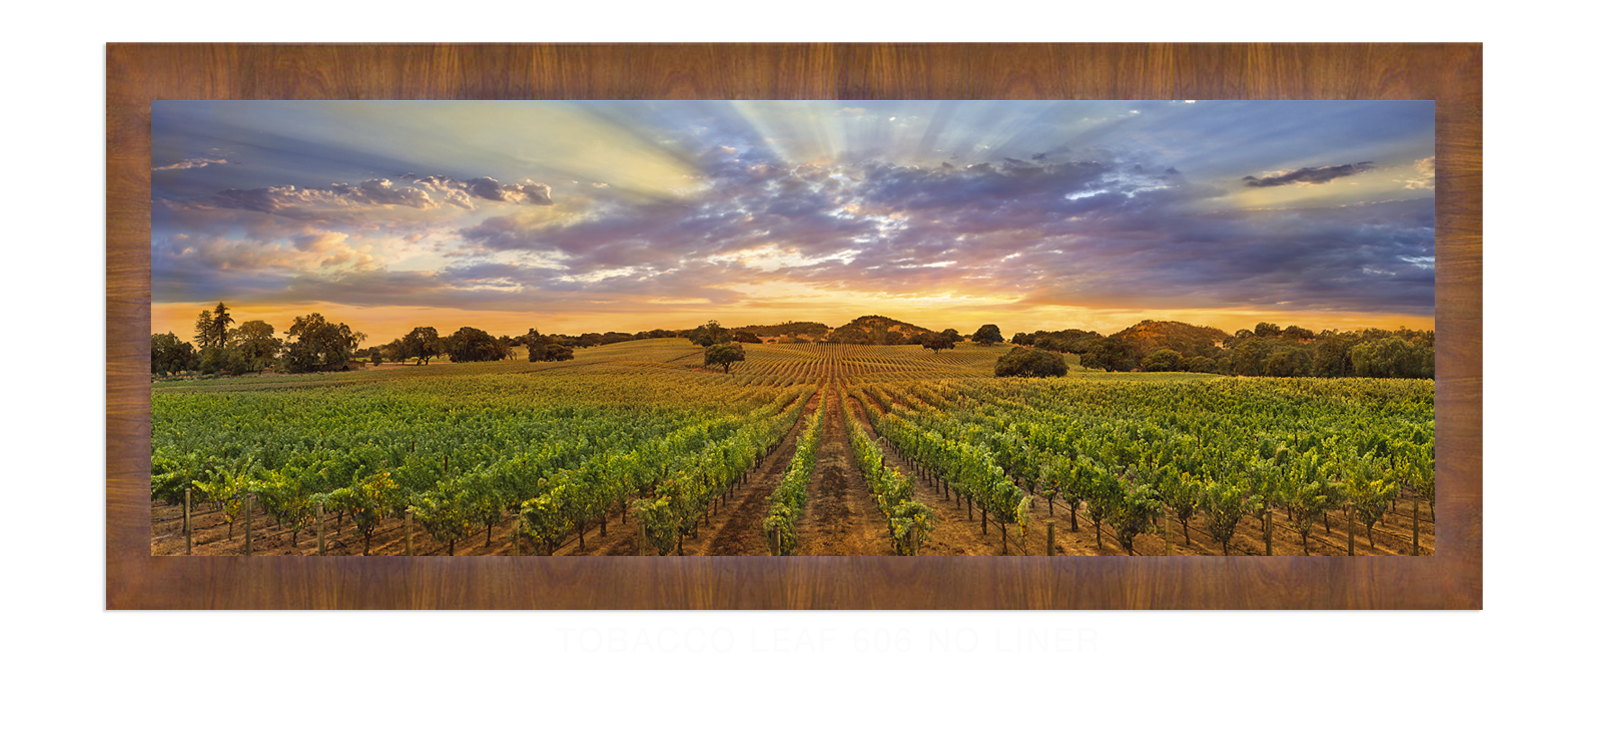 25NapaLandscape Tobacco Leaf 606 w_No Liner T